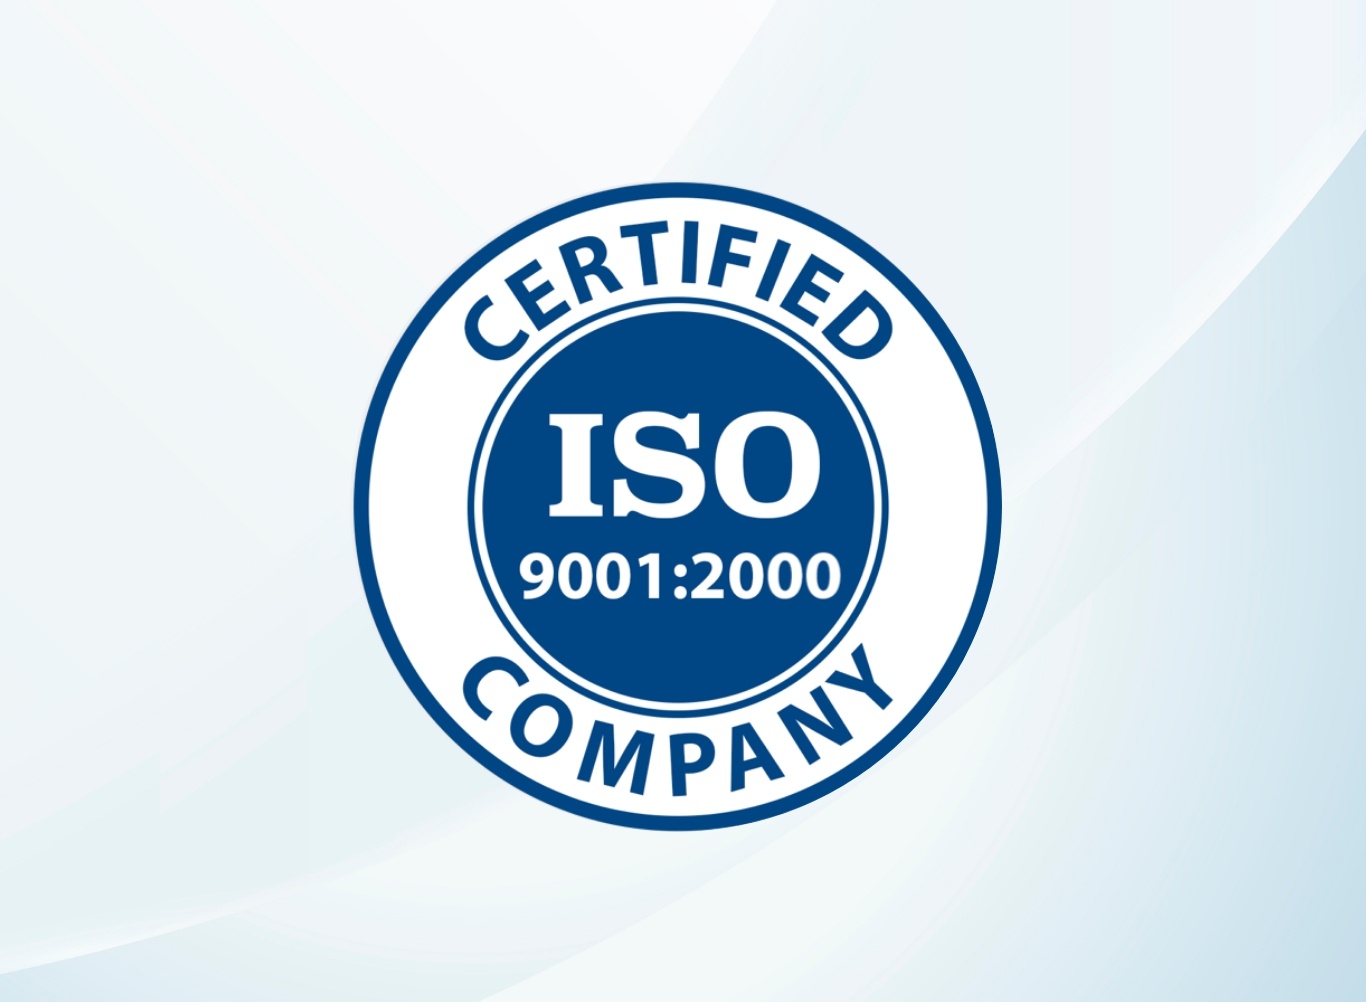 Award of Pride ISO 9001:2000 Certified